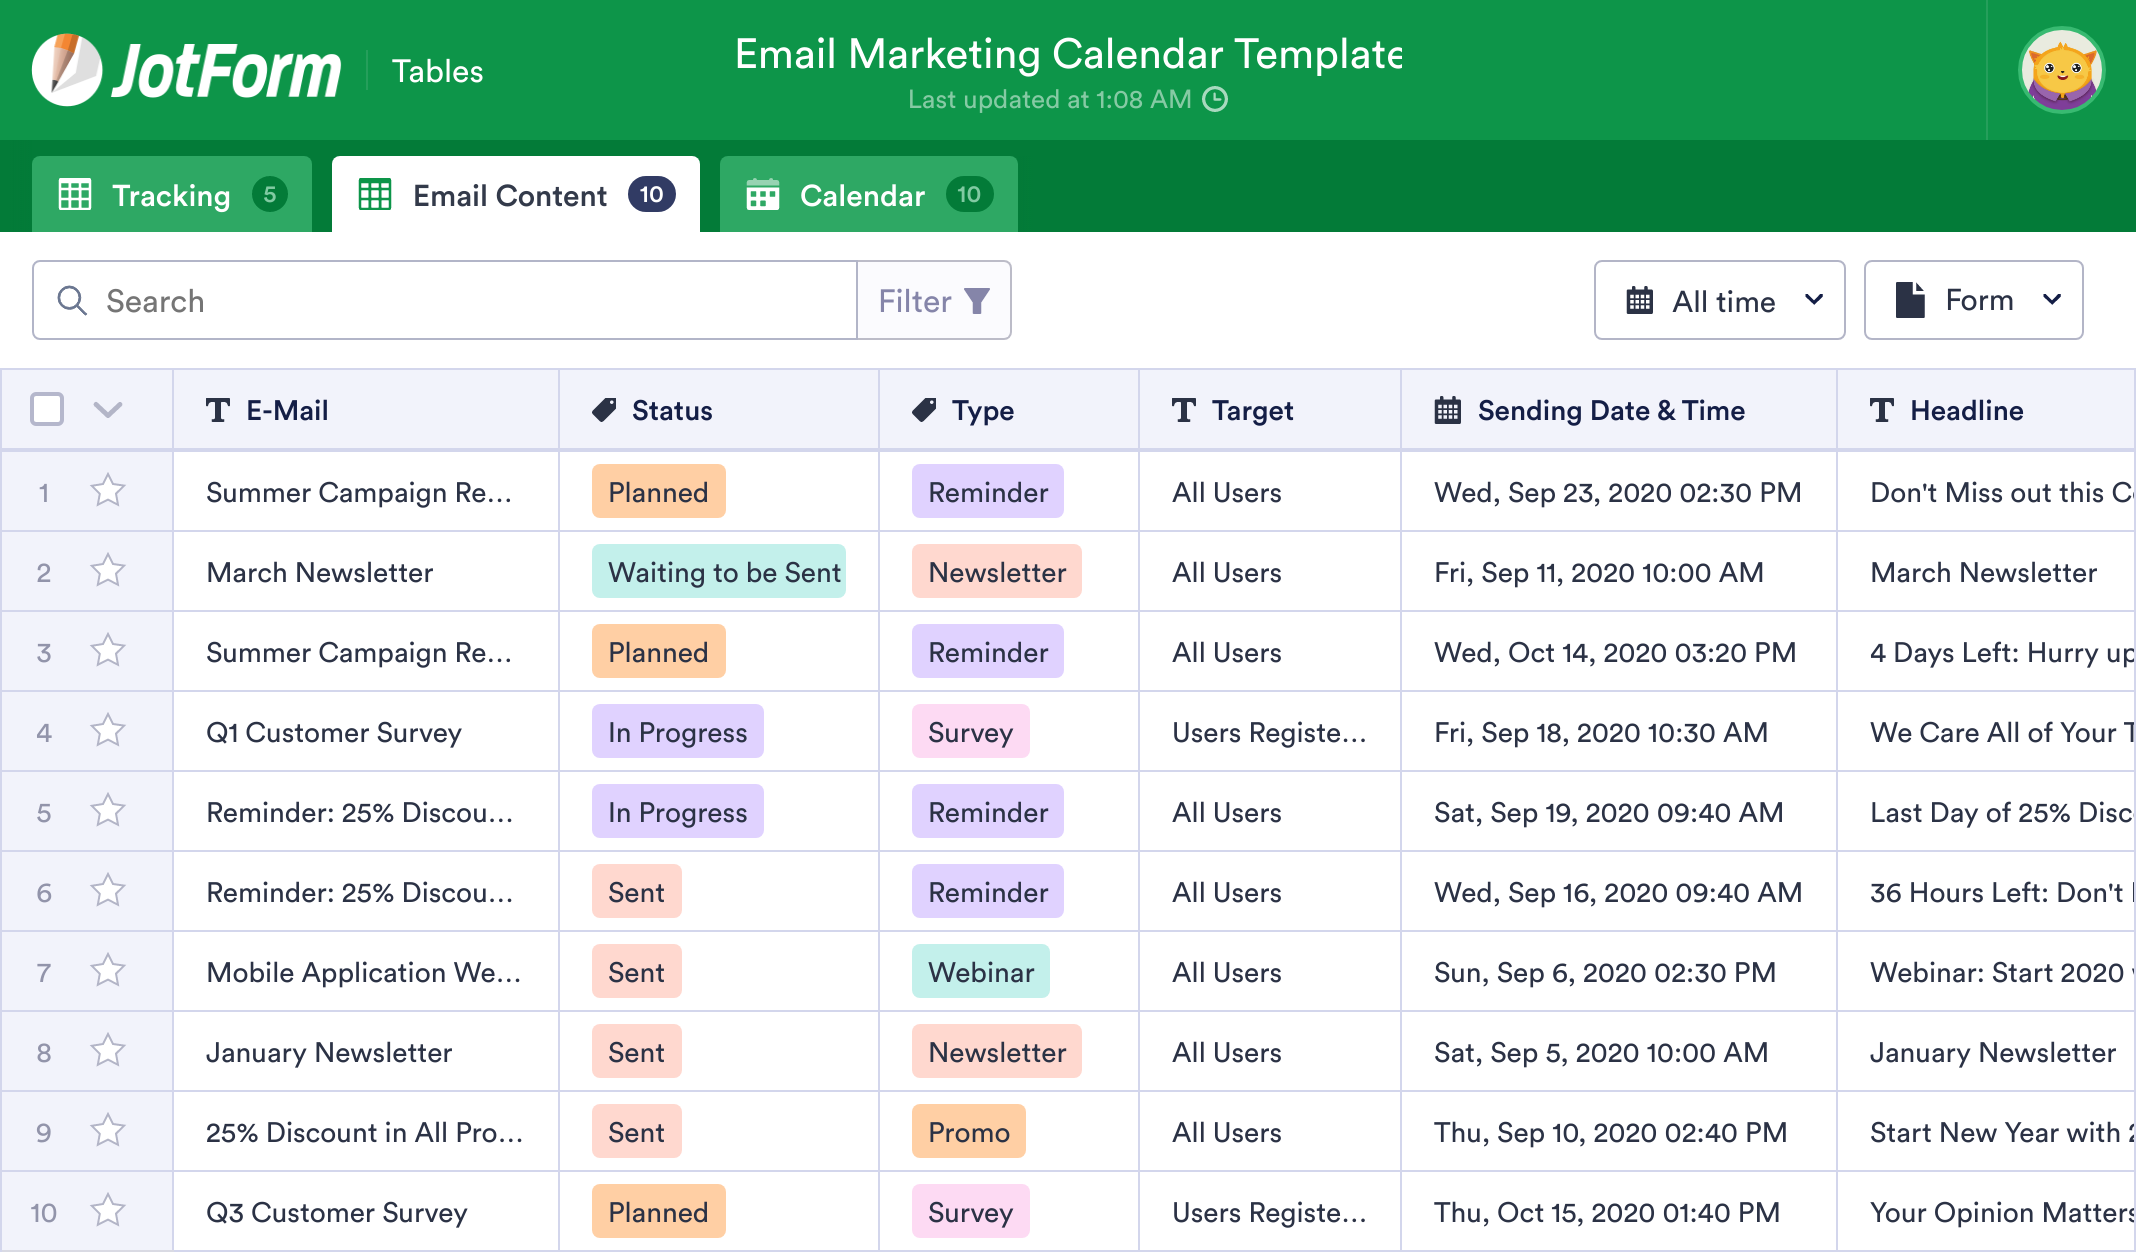 Email Marketing Calendar Template JotForm Tables